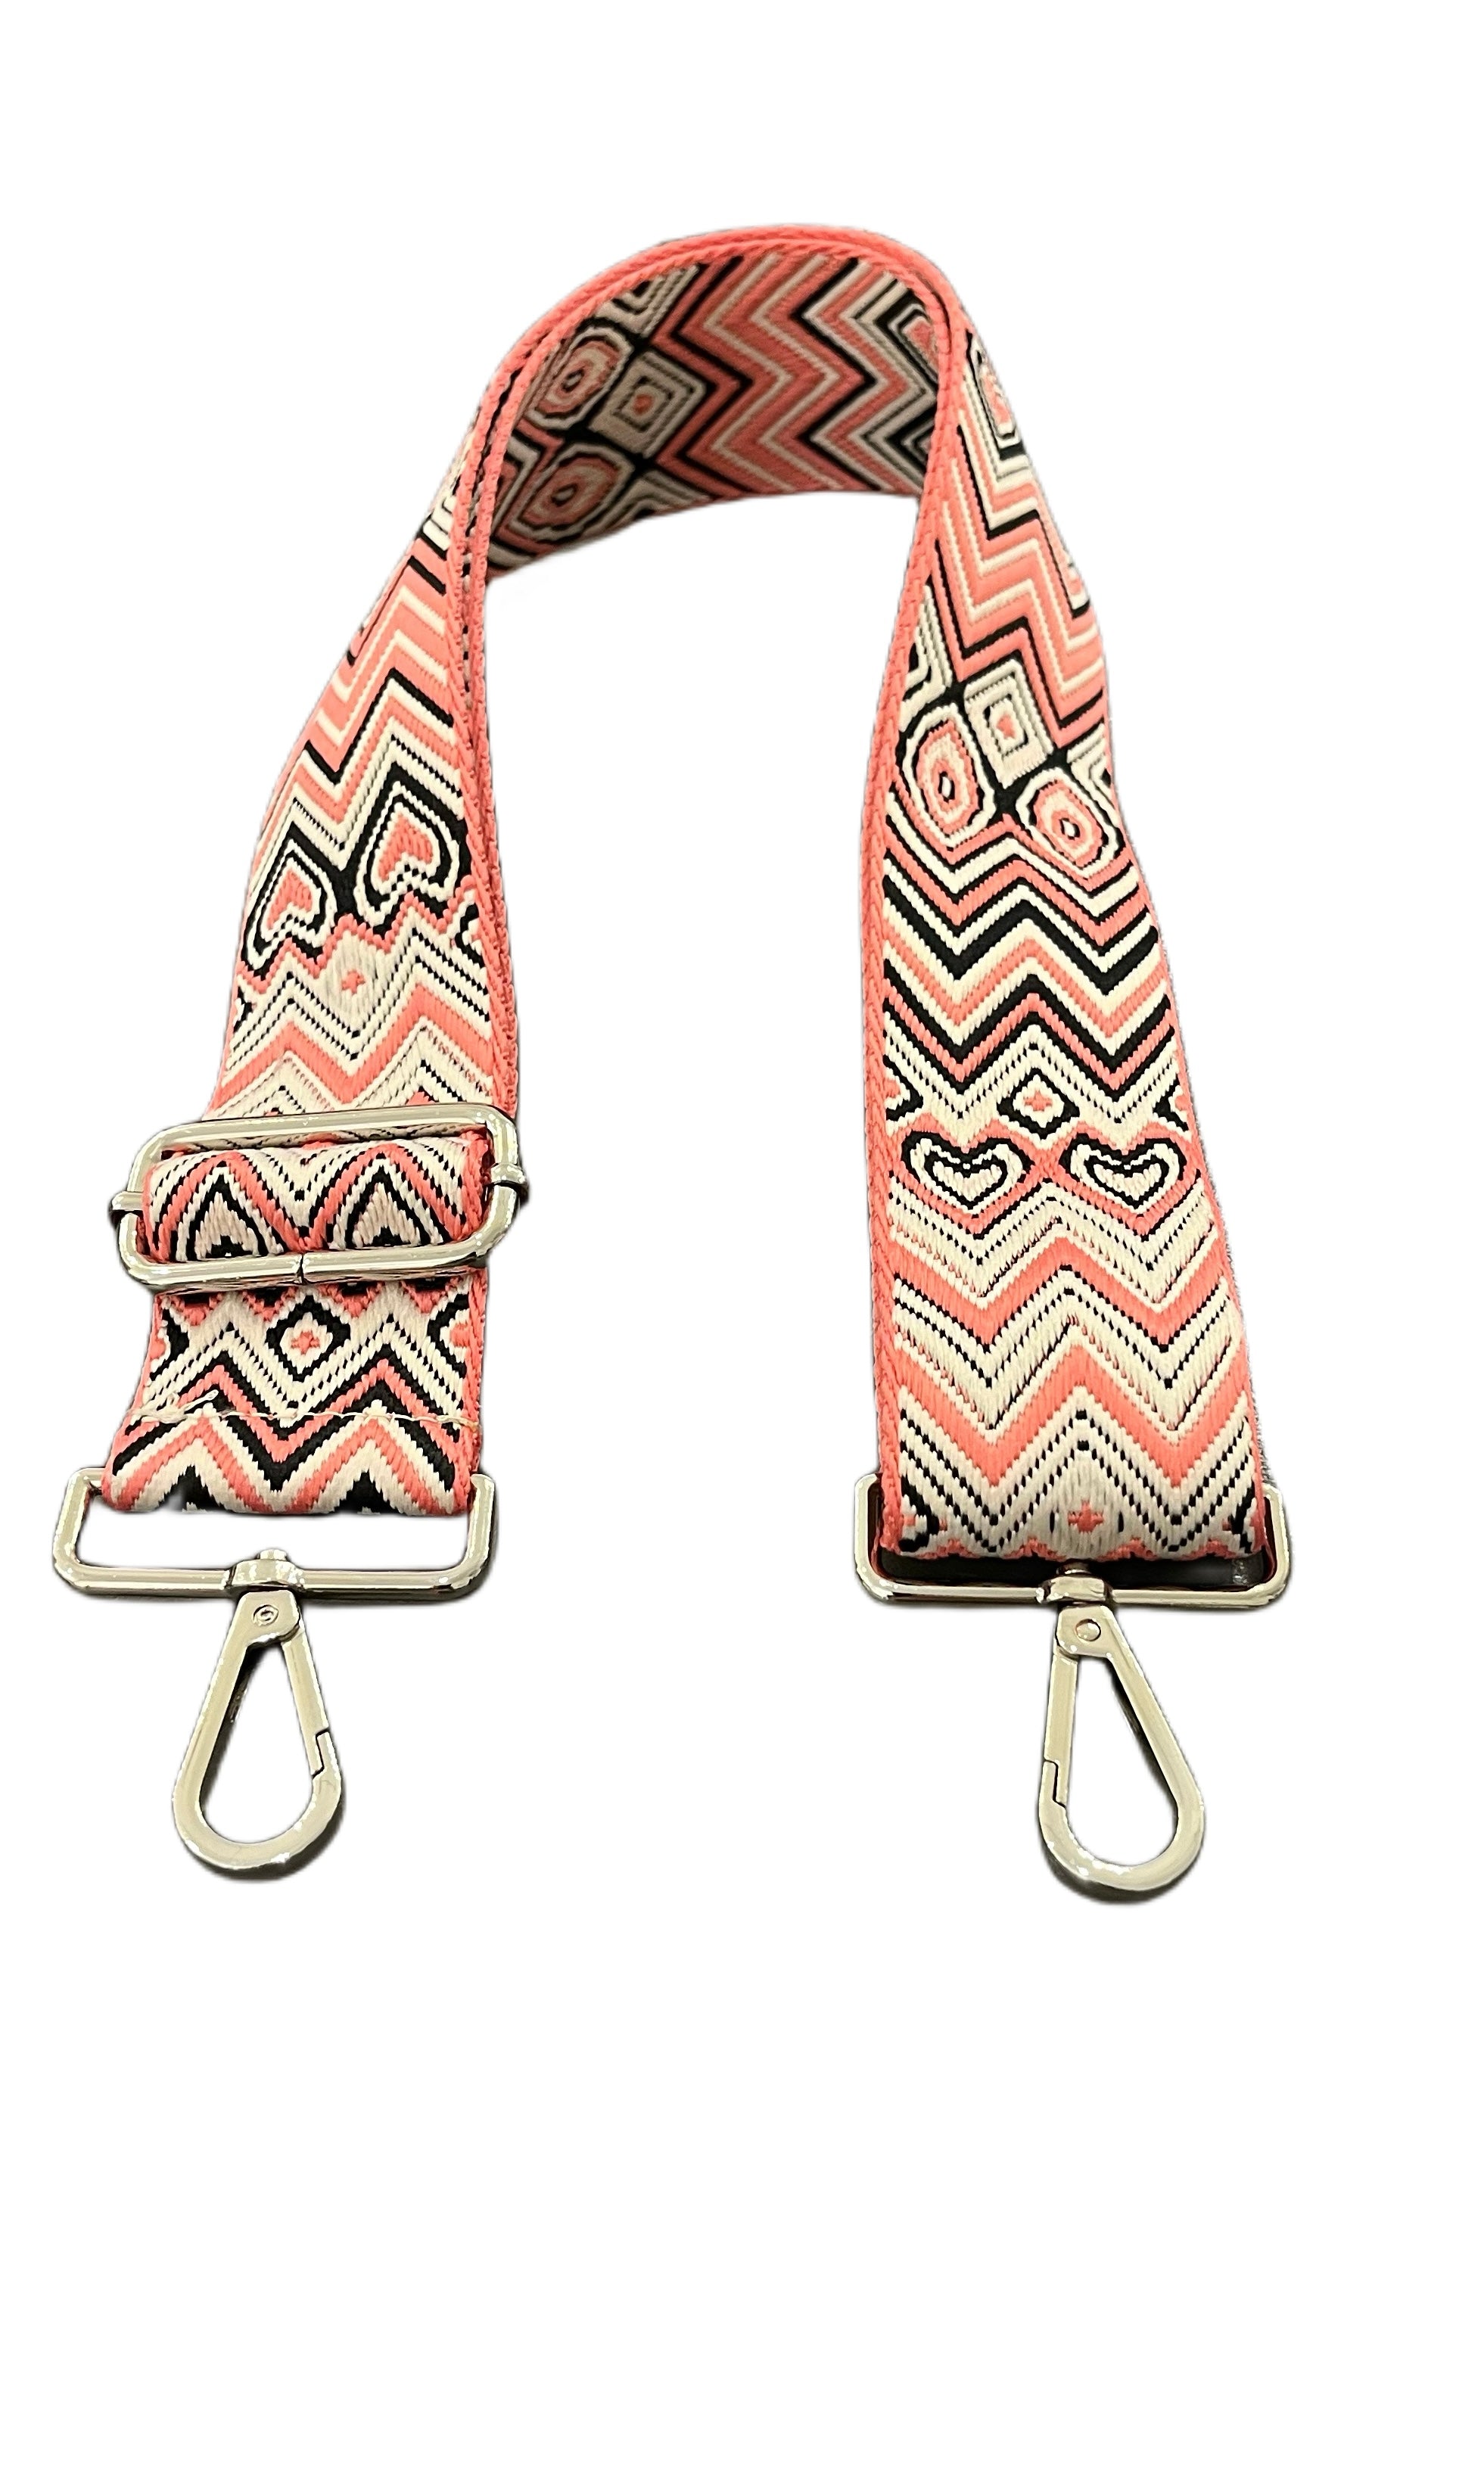 Bodinna love bag straps